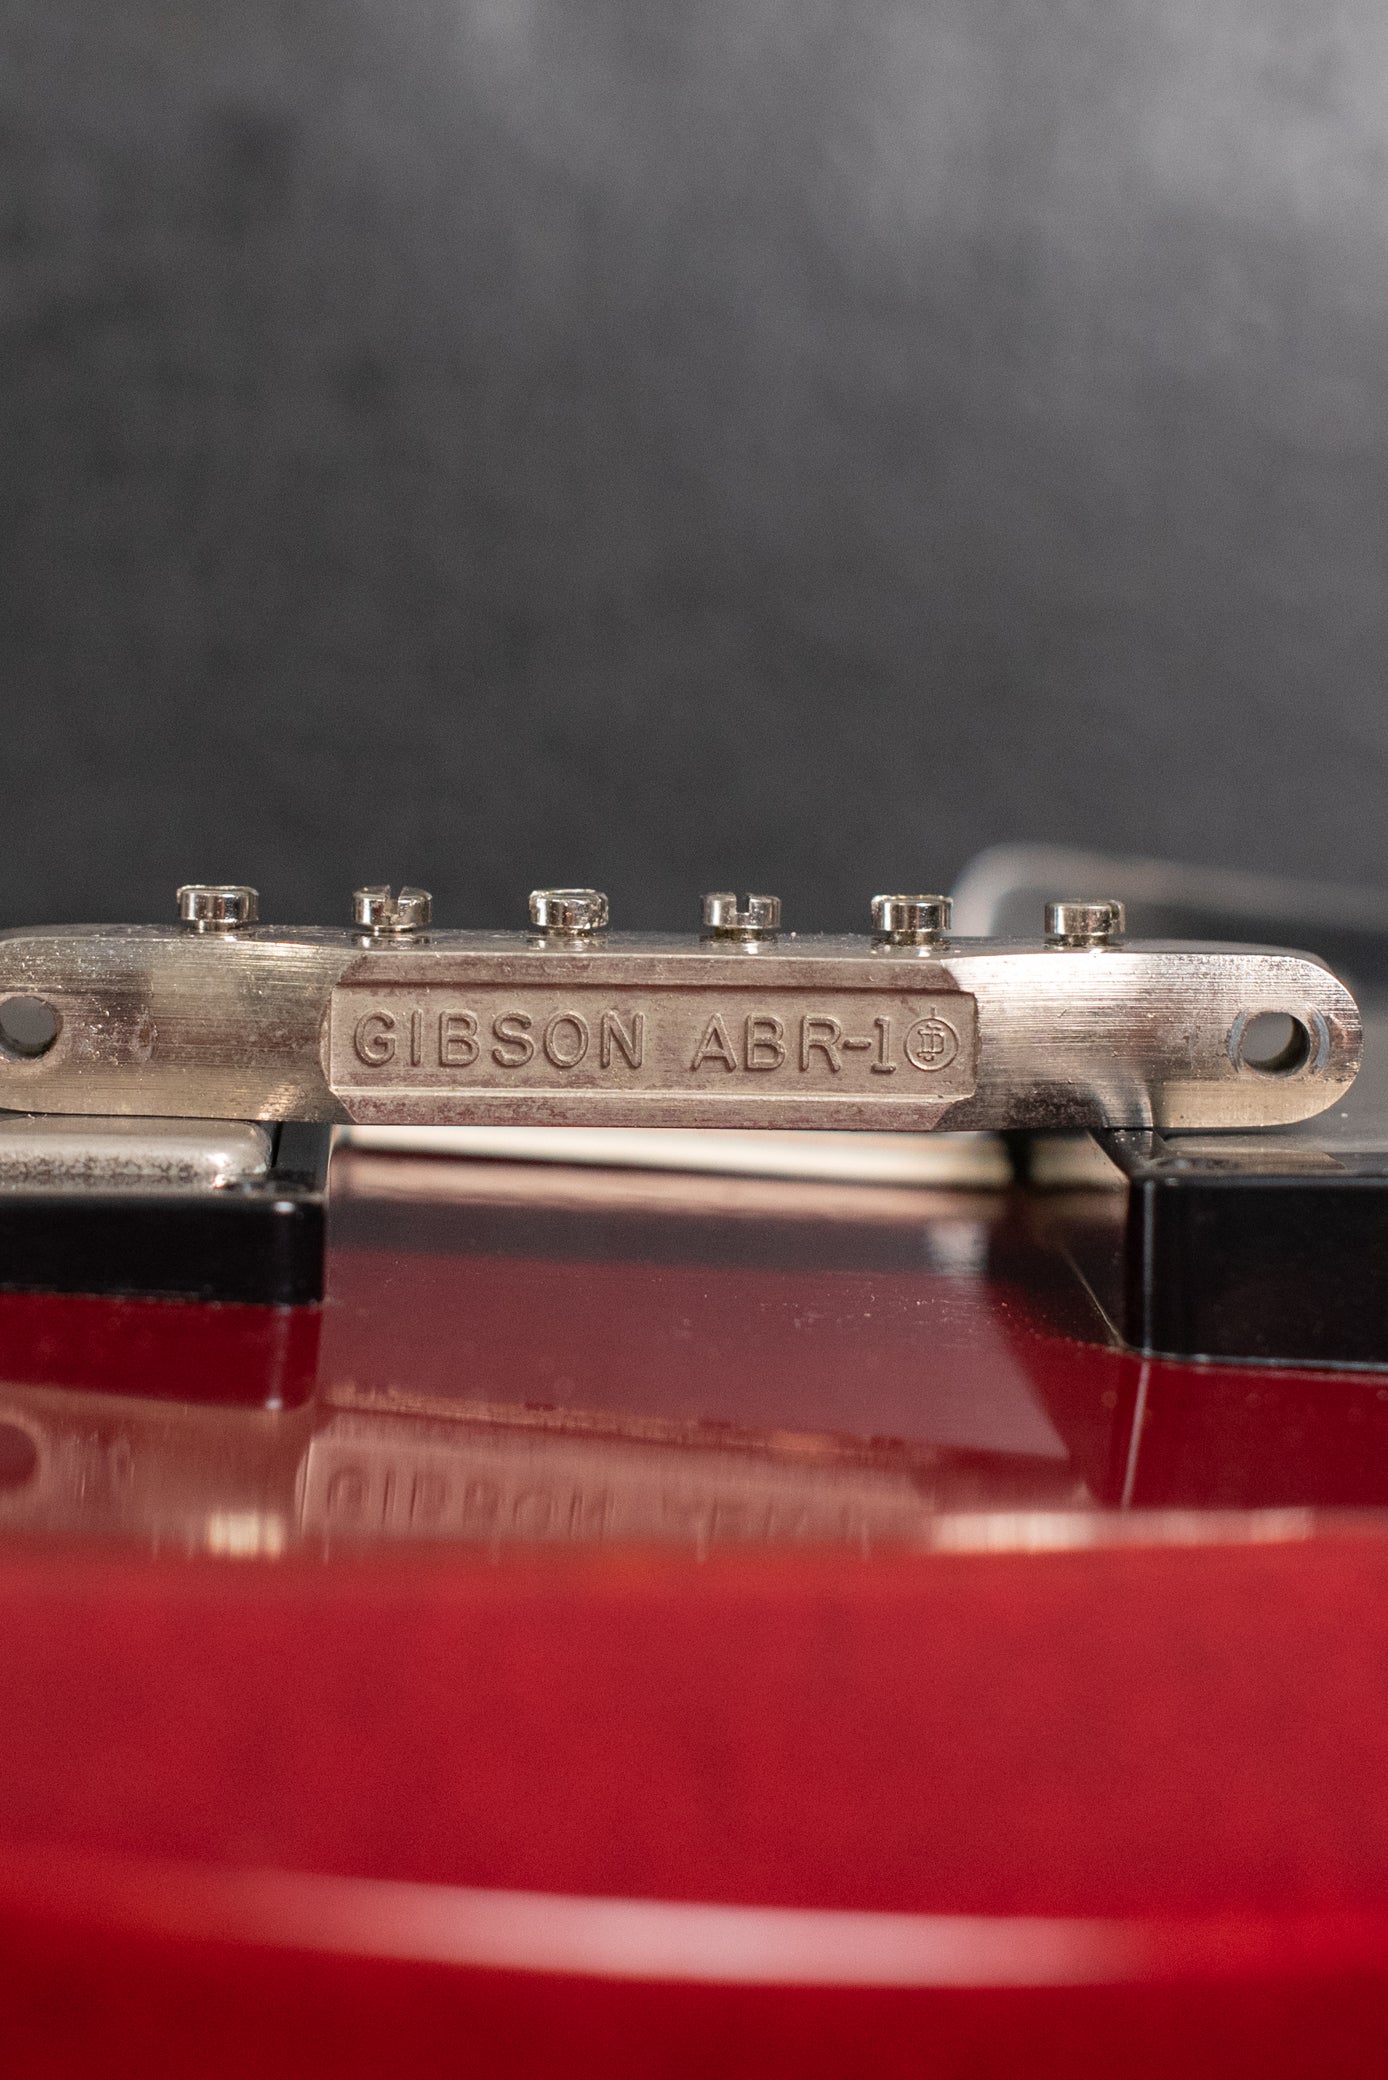 Gibson ABR-1 bridge